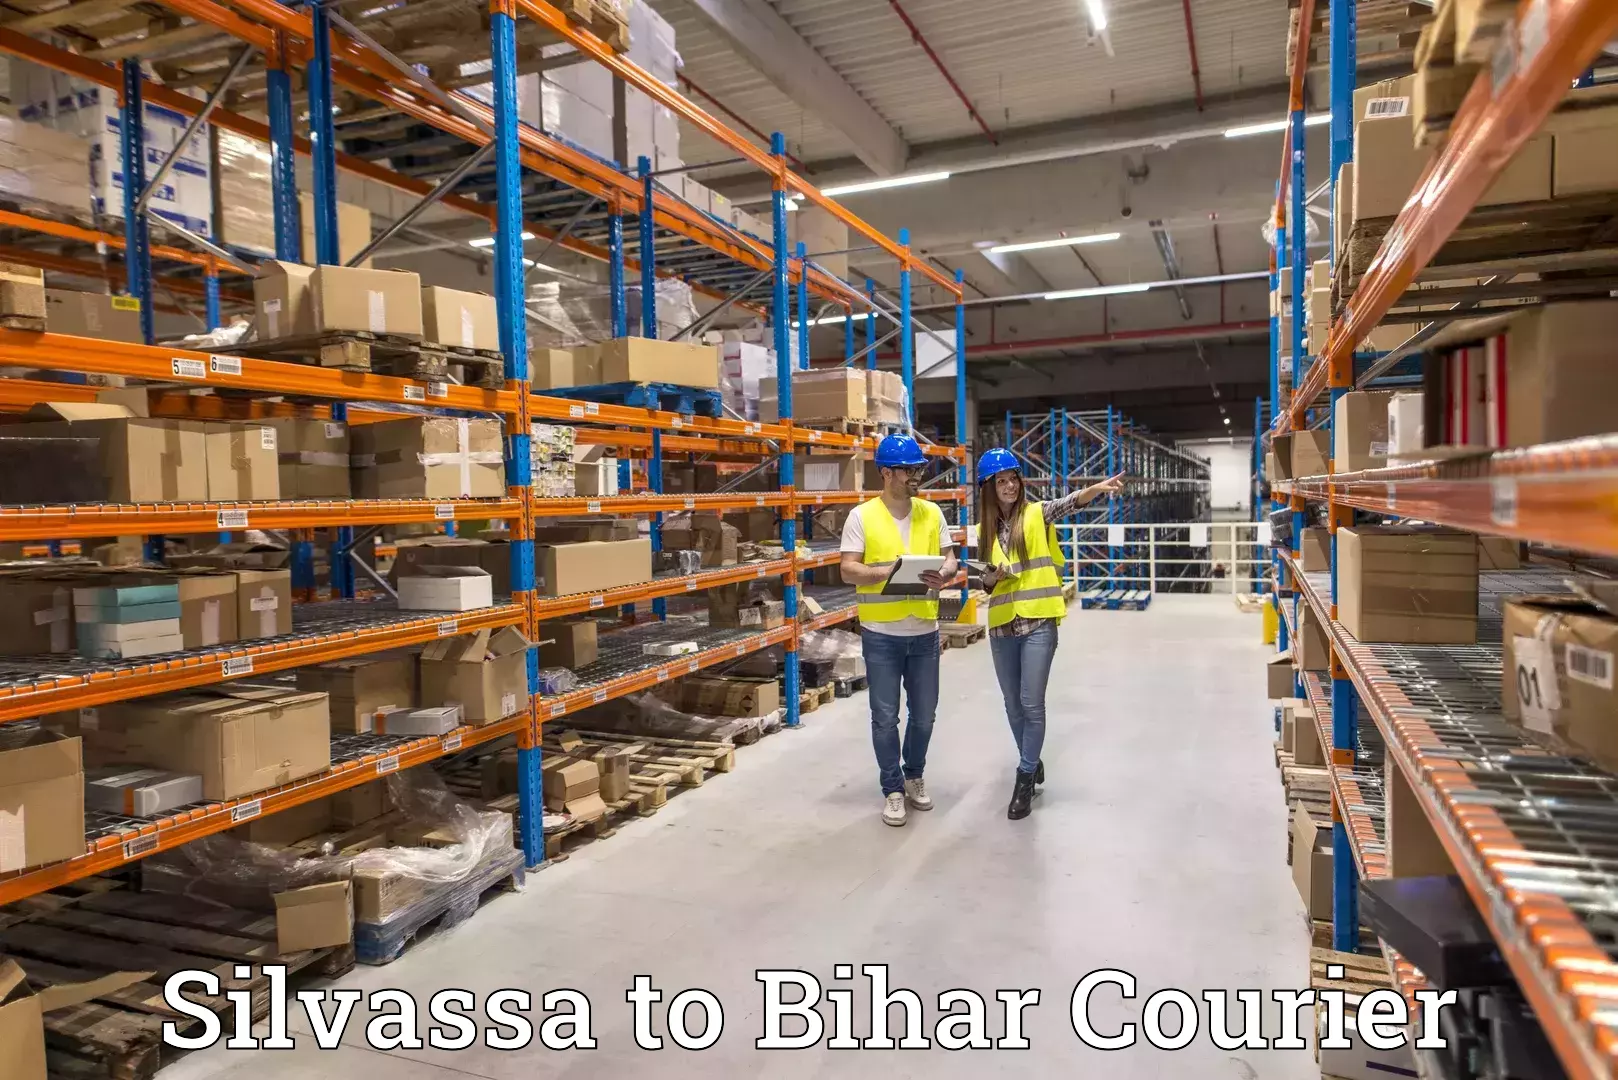 Global logistics network Silvassa to Bhorey